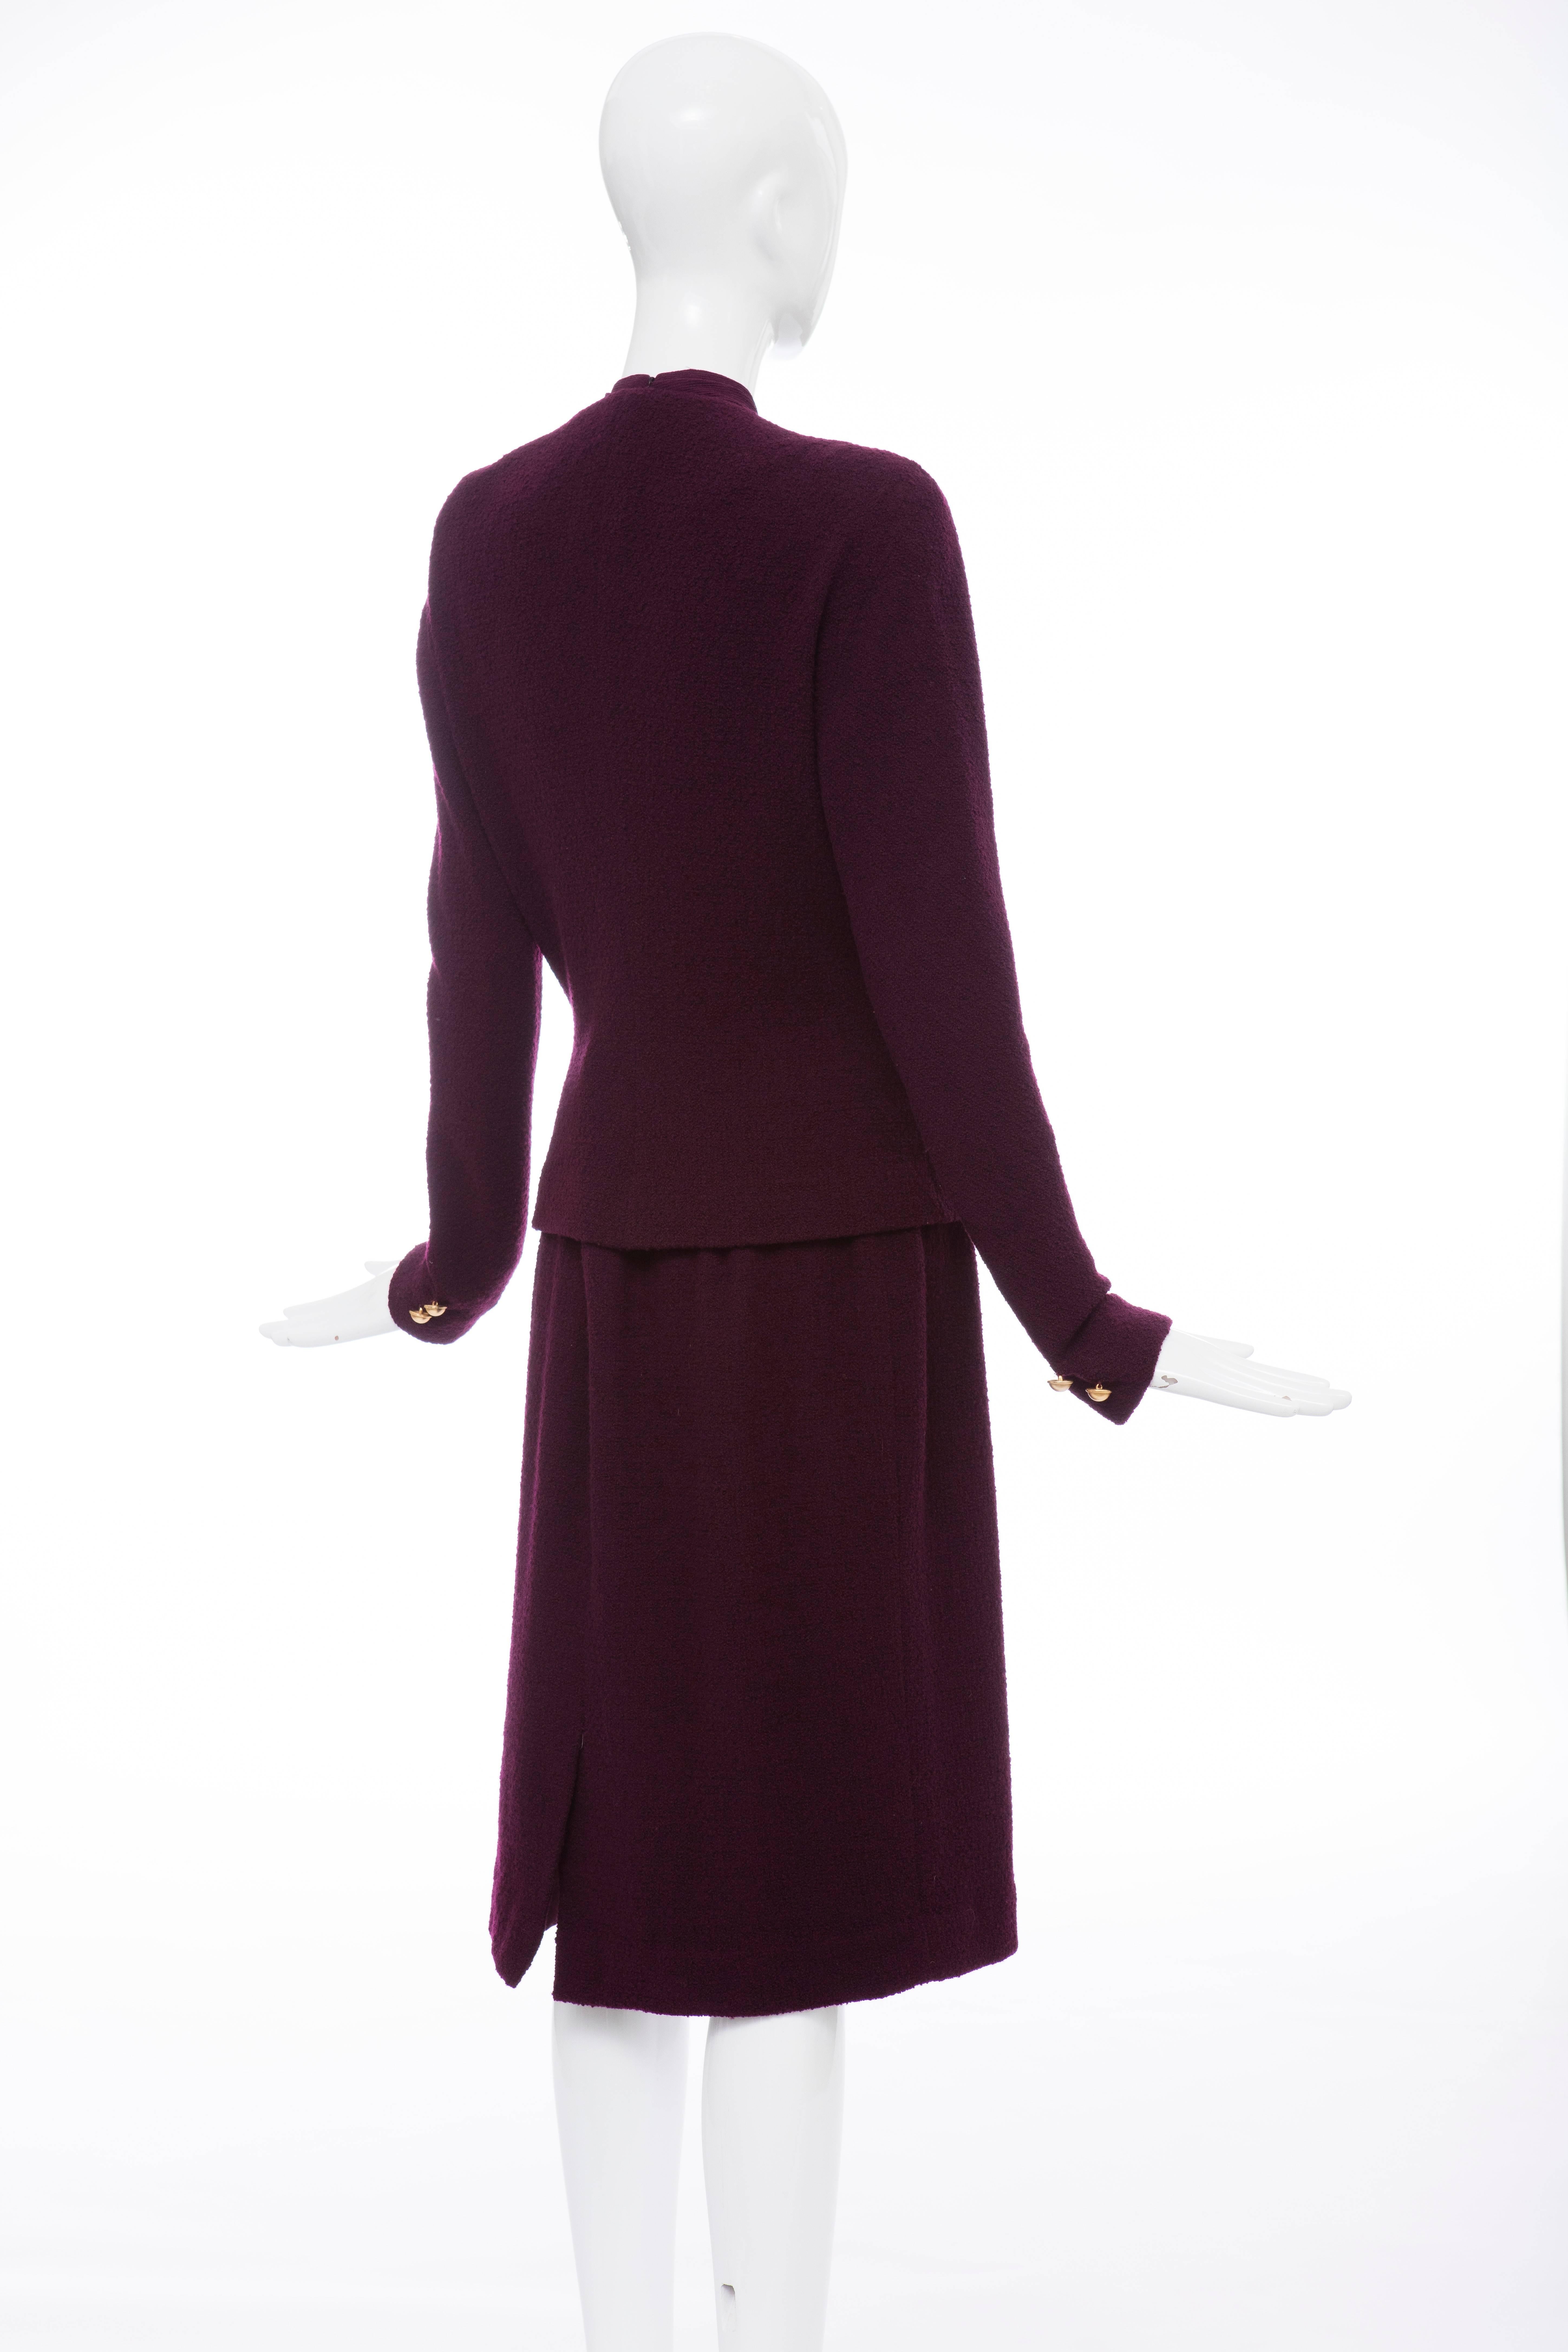 Donna Karan Eggplant Stretch Wool Nylon Knit Skirt Suit, Circa 1980's 2